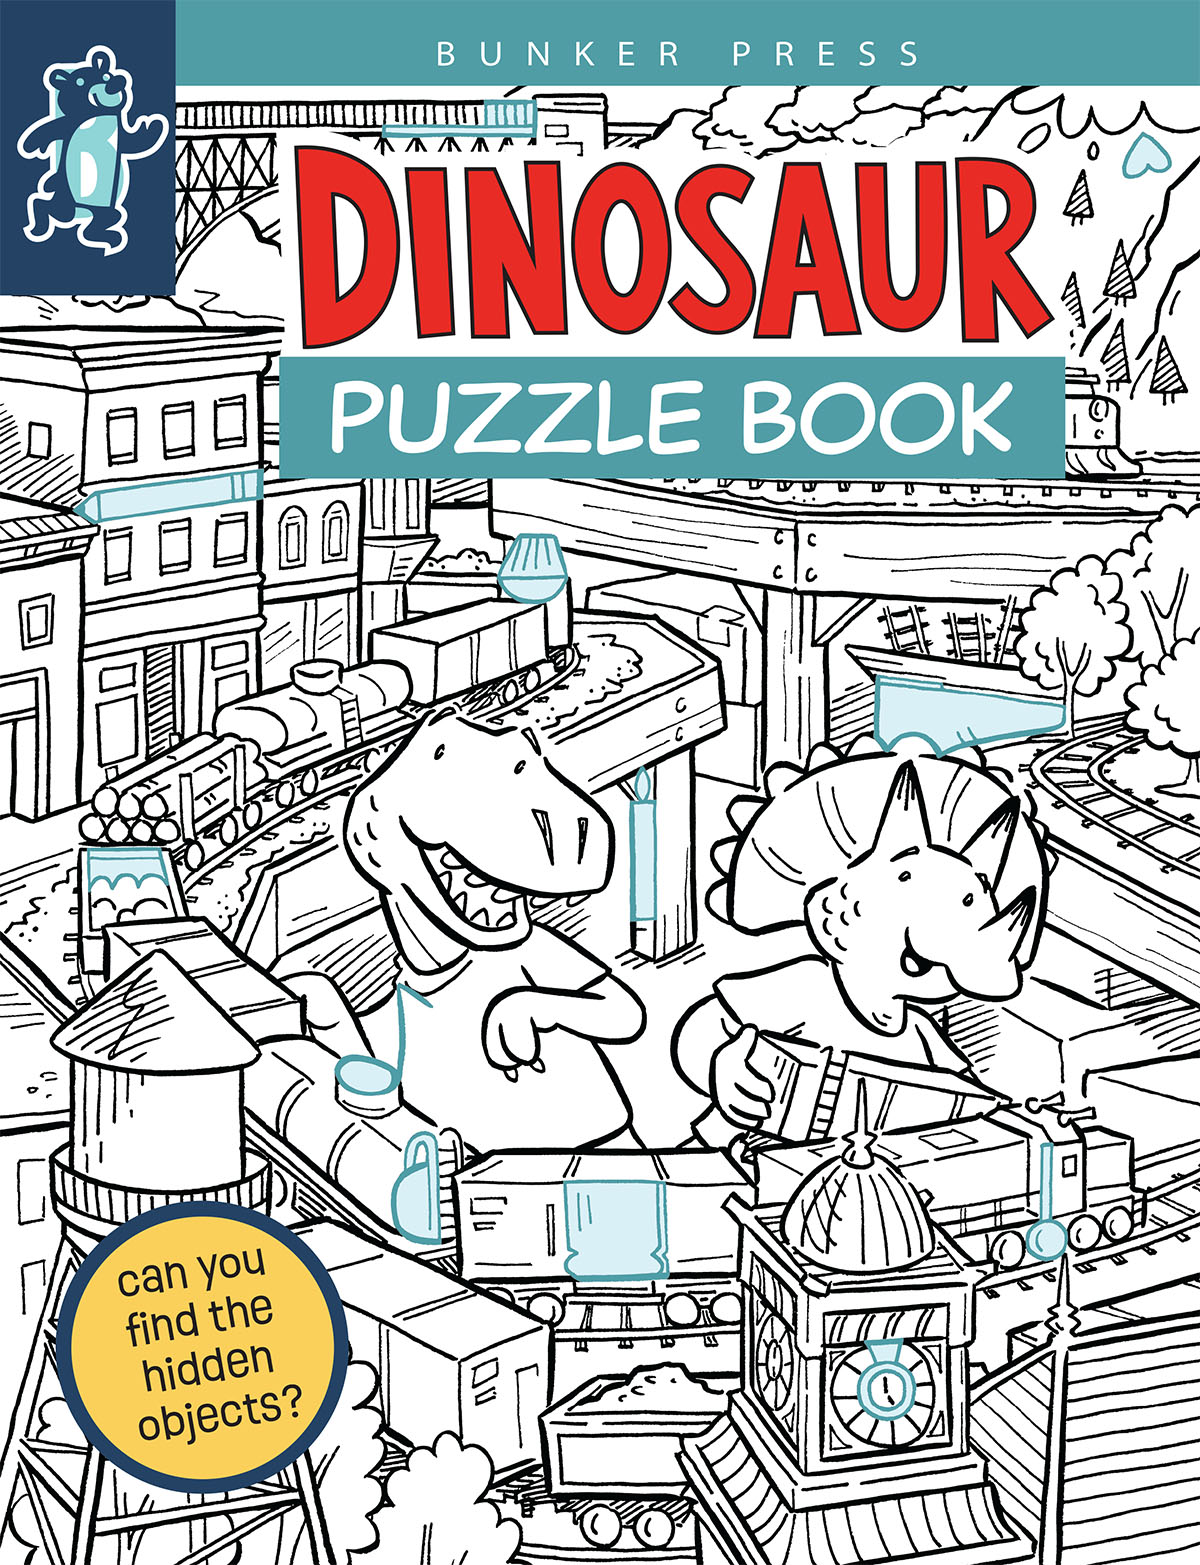 Dinosaur puzzle book cover